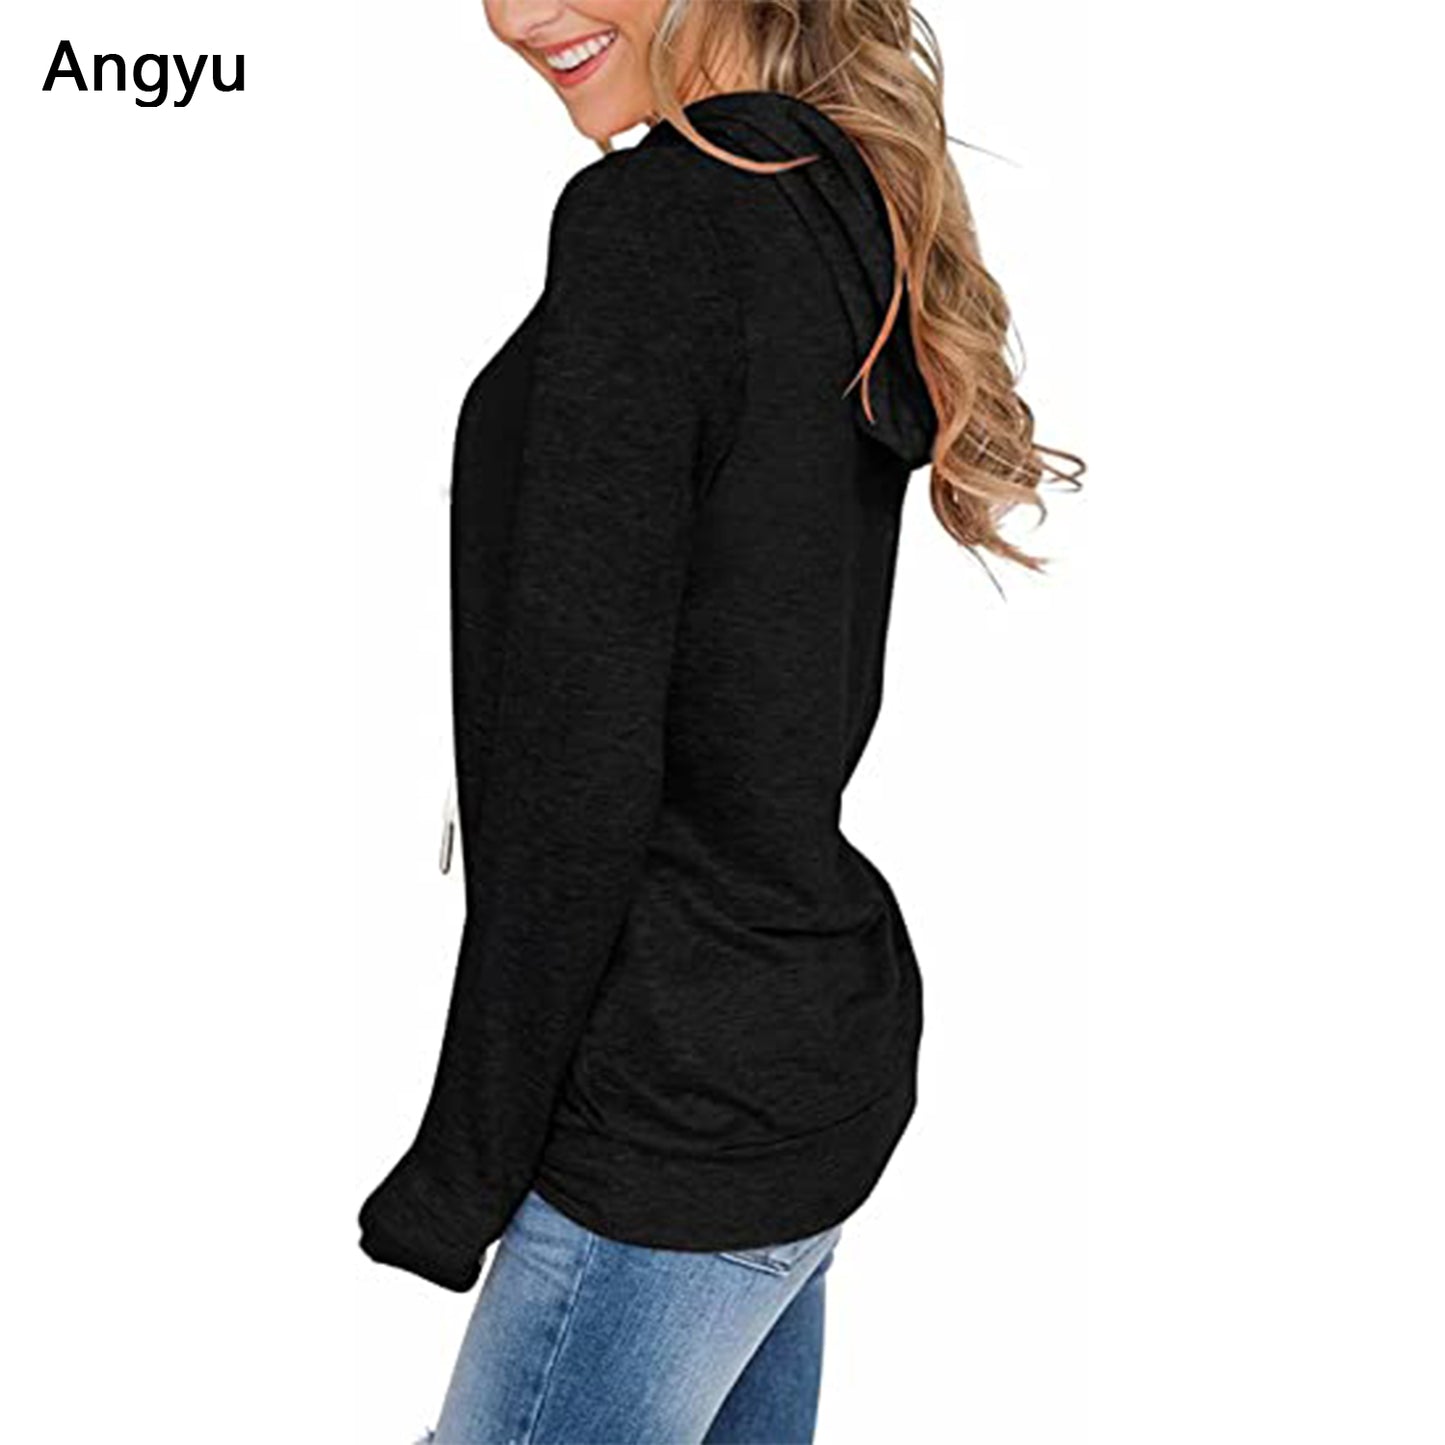 Angyu Women Hoodies Tops Long Sleeve Drawstring Pullover Sweatshirts with Pocket